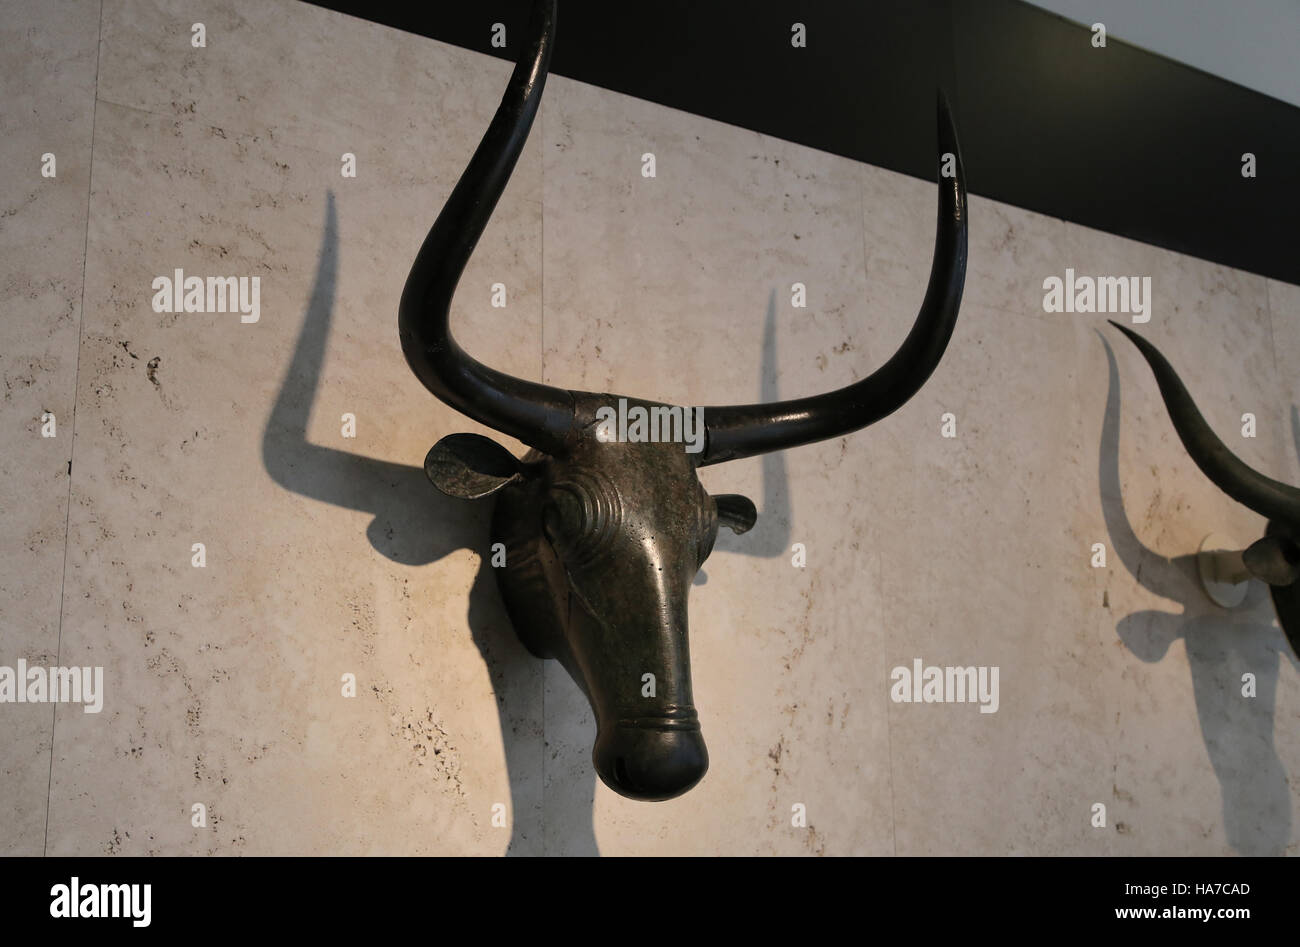 Bulls from Costitx. 500 BC-200 BC. Iron age. Material: bronze. Shrine of Predio de Son Corro, Costitx, Majorca, Spain. National Archaeological Museum, Stock Photo